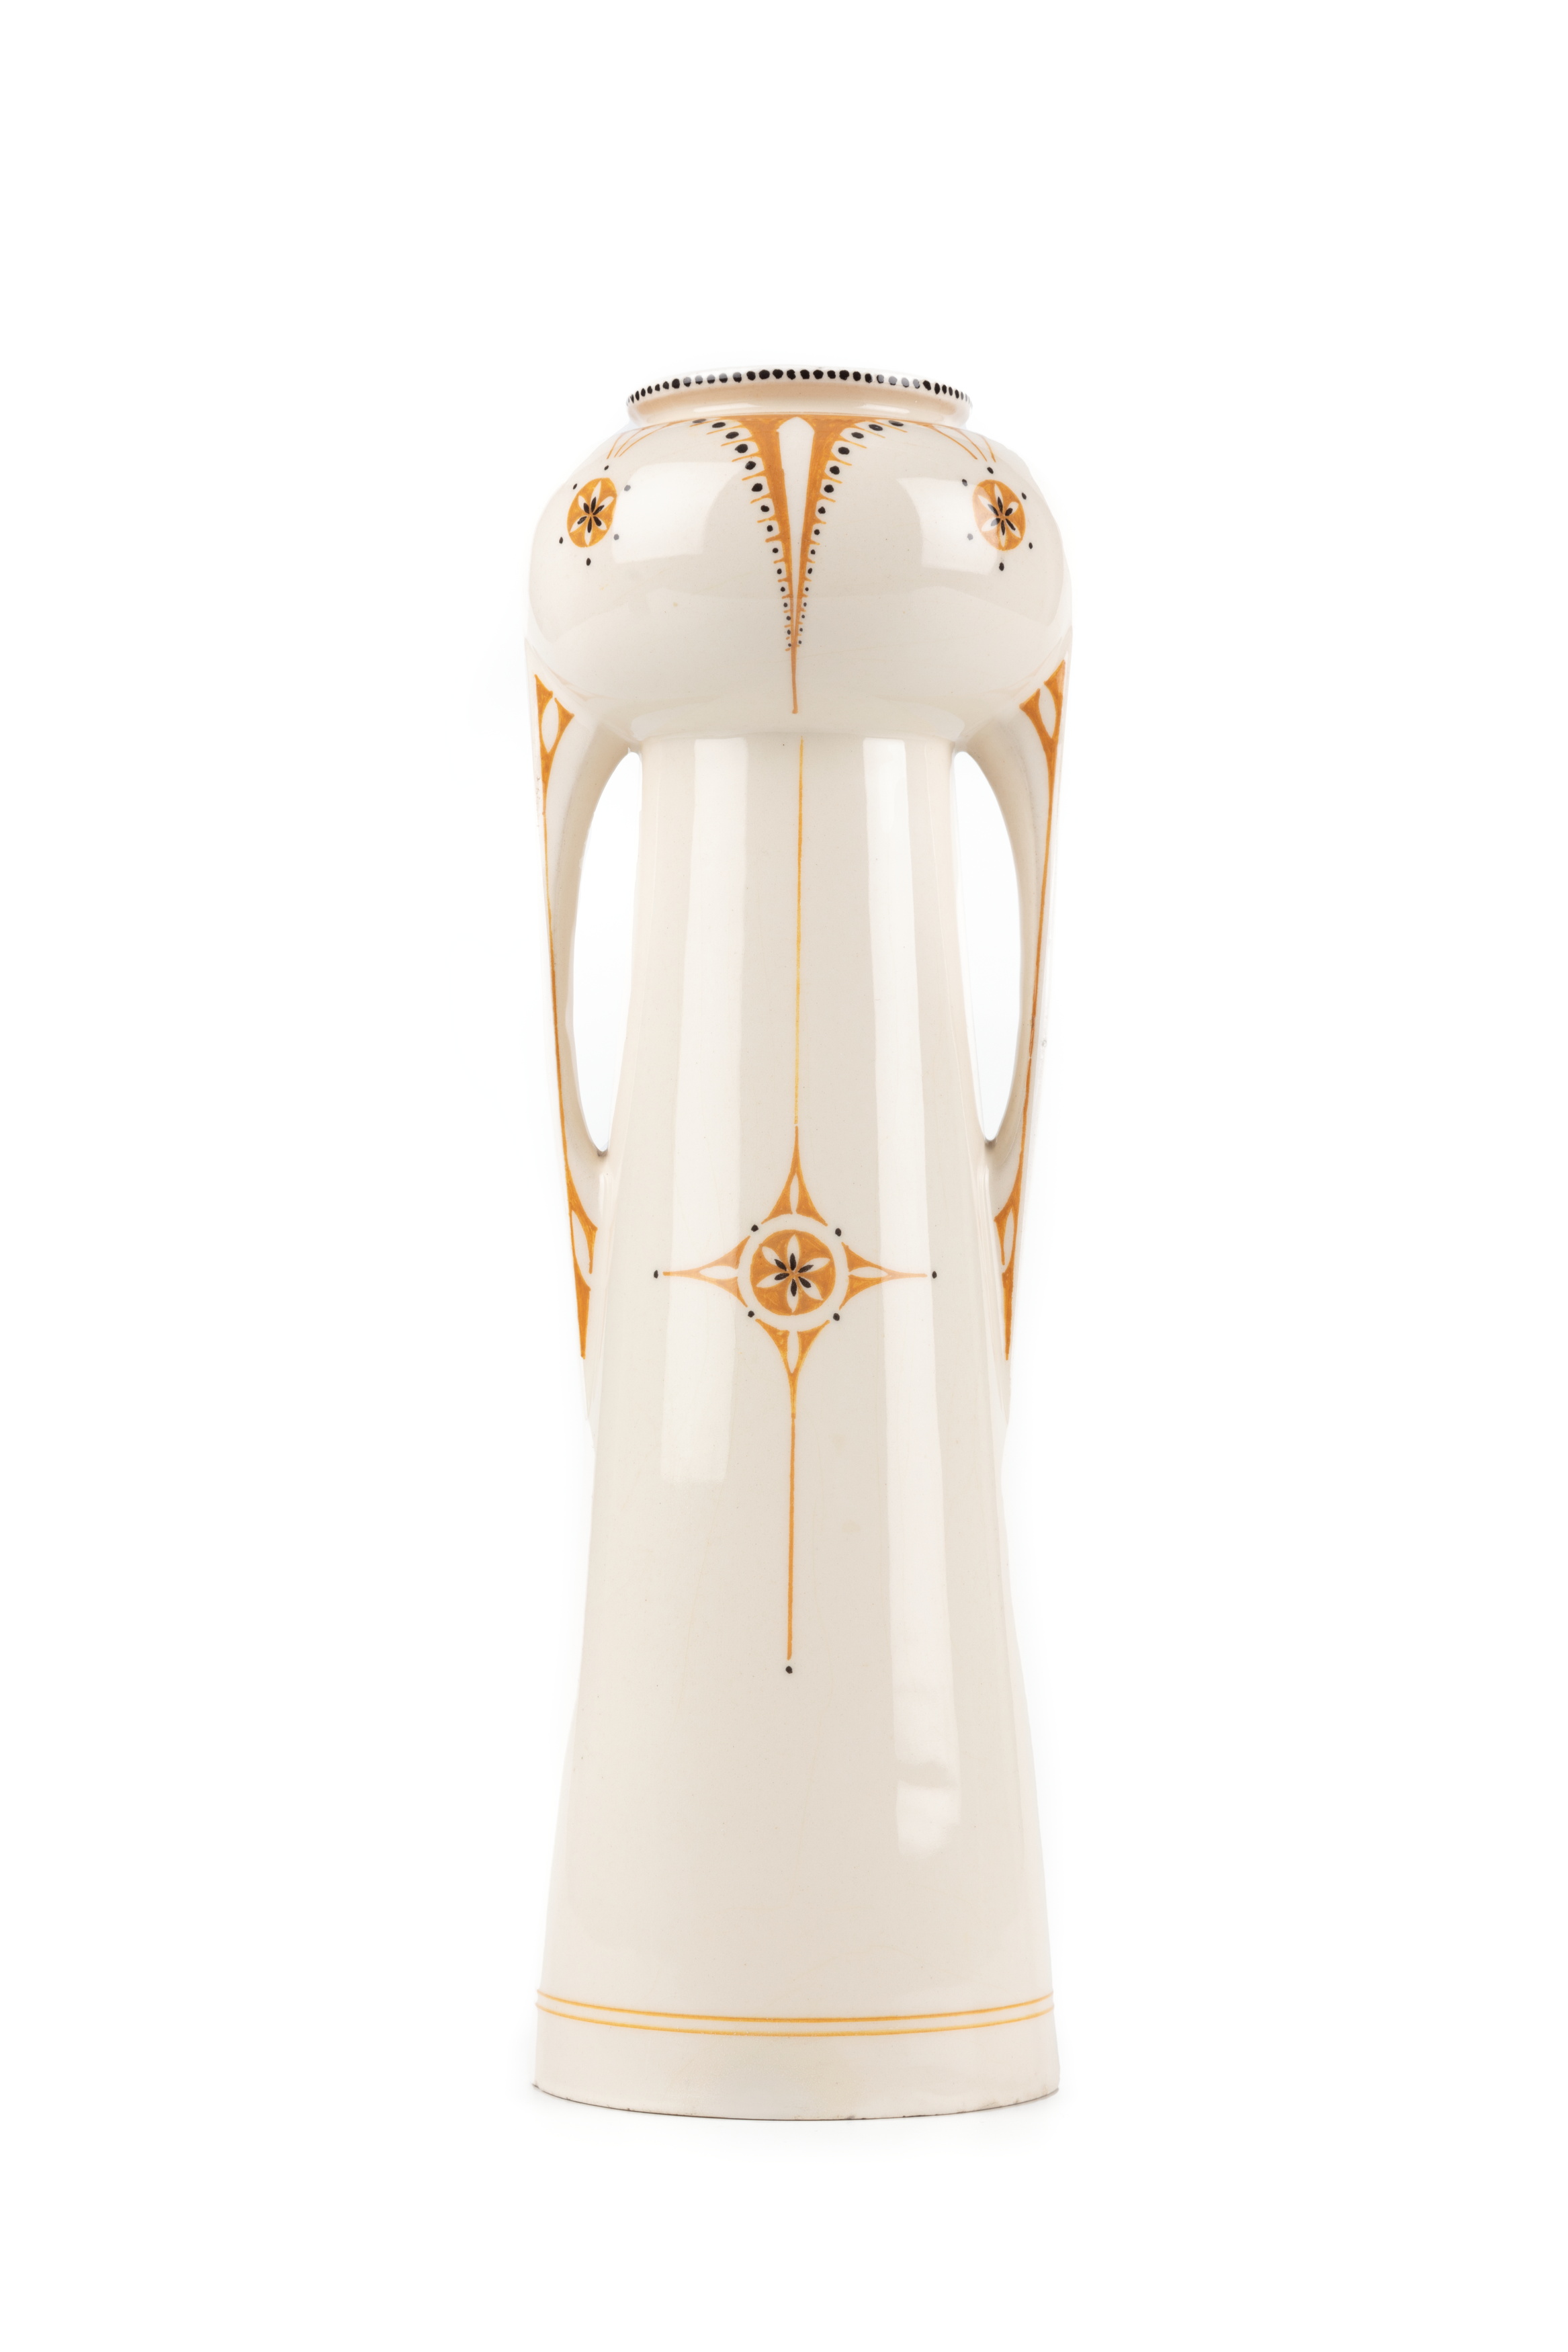 Vase designed and made by Tegel en Fayencefabriek Amphora